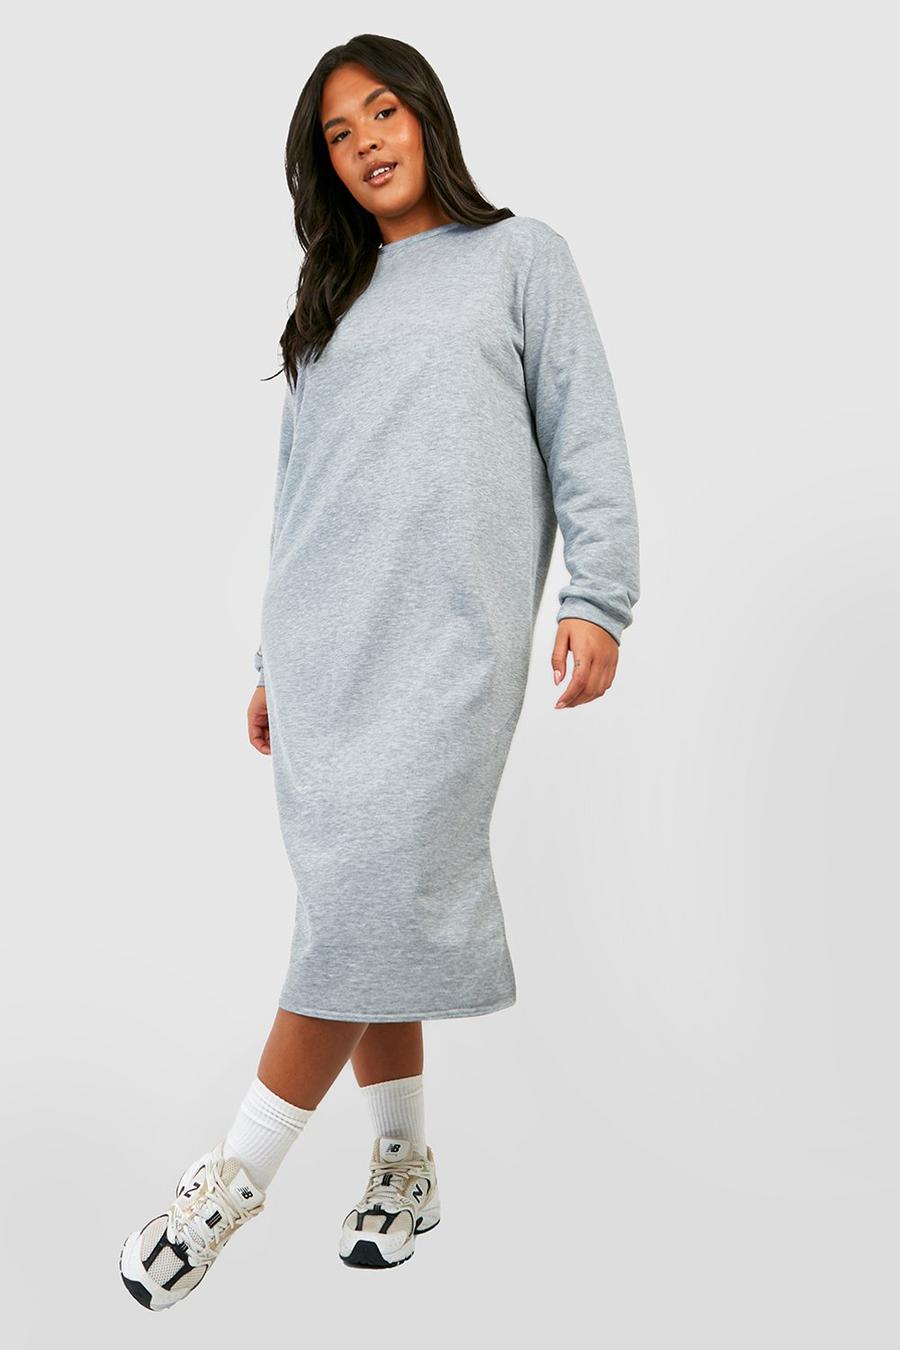 KaloryWee Hoodie Dress Women Uk,Womens Sweatshirt Long Sleeve Letter Print T-Shirt Loose Jumper Midi Dress With Pockets 